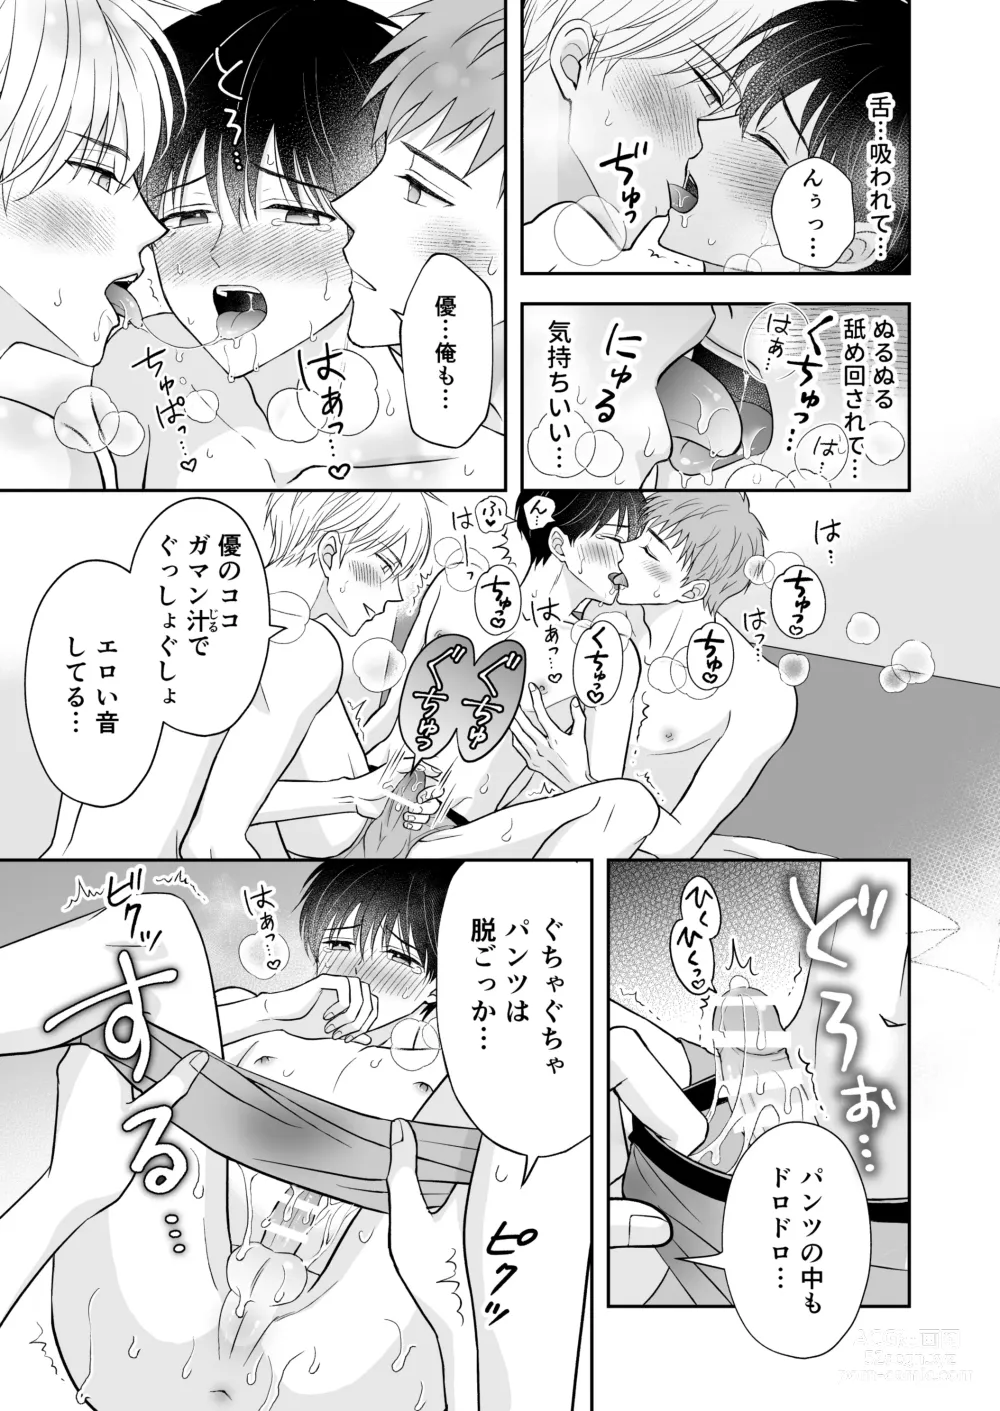 Page 10 of doujinshi 3-nin wa Nakayoshi